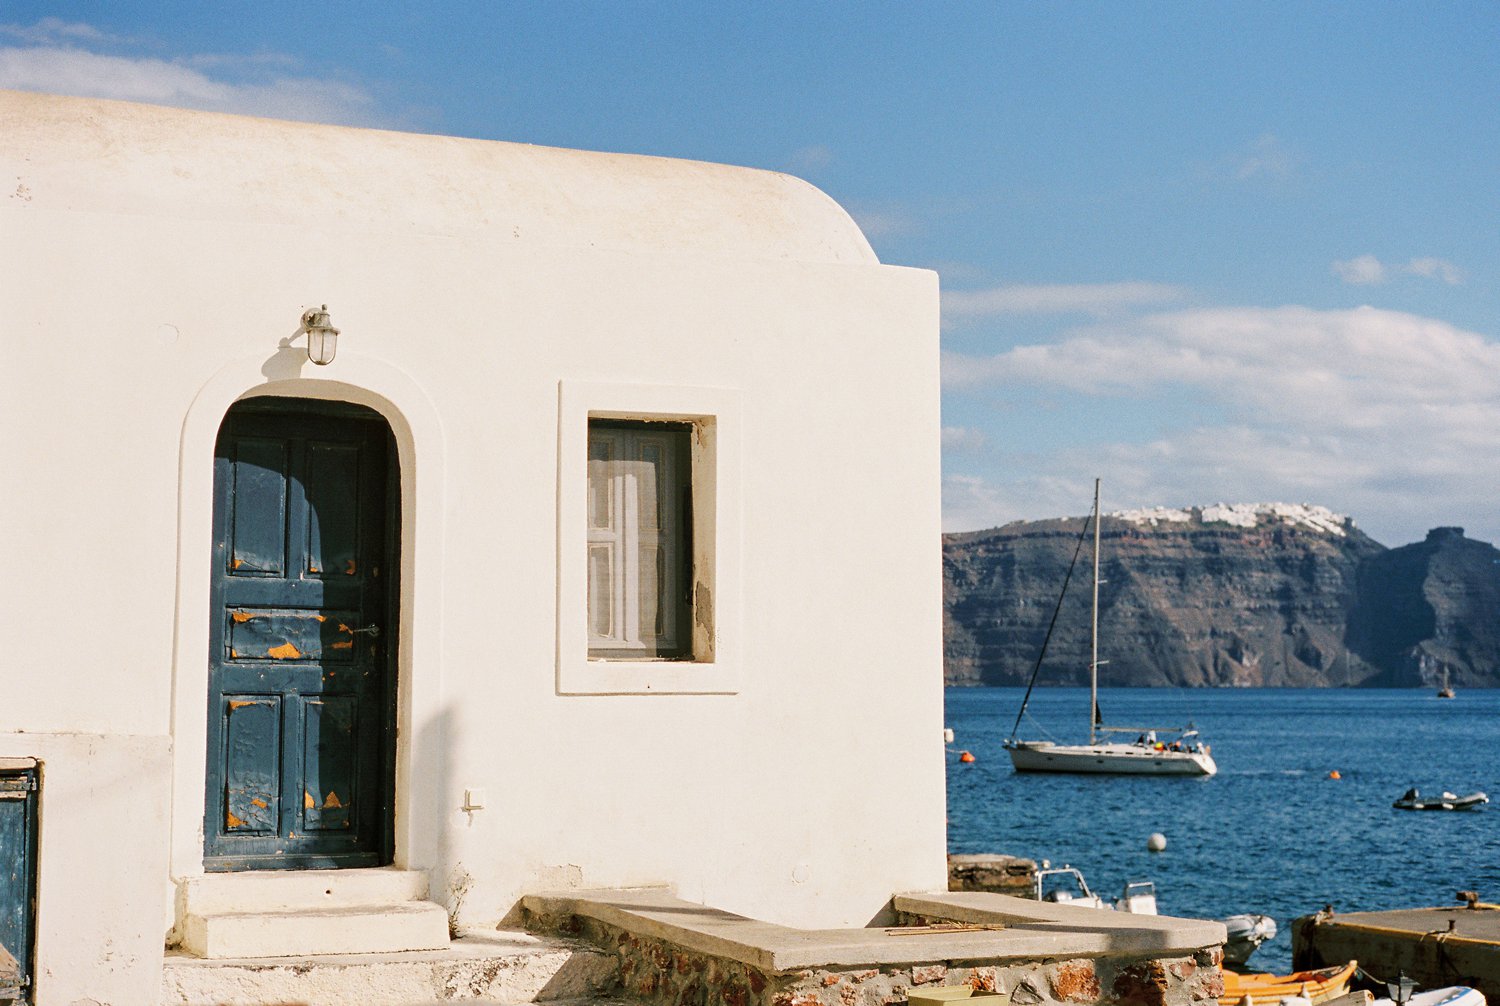 Santorini Adventure Wedding // Laura Goldenberger Photography